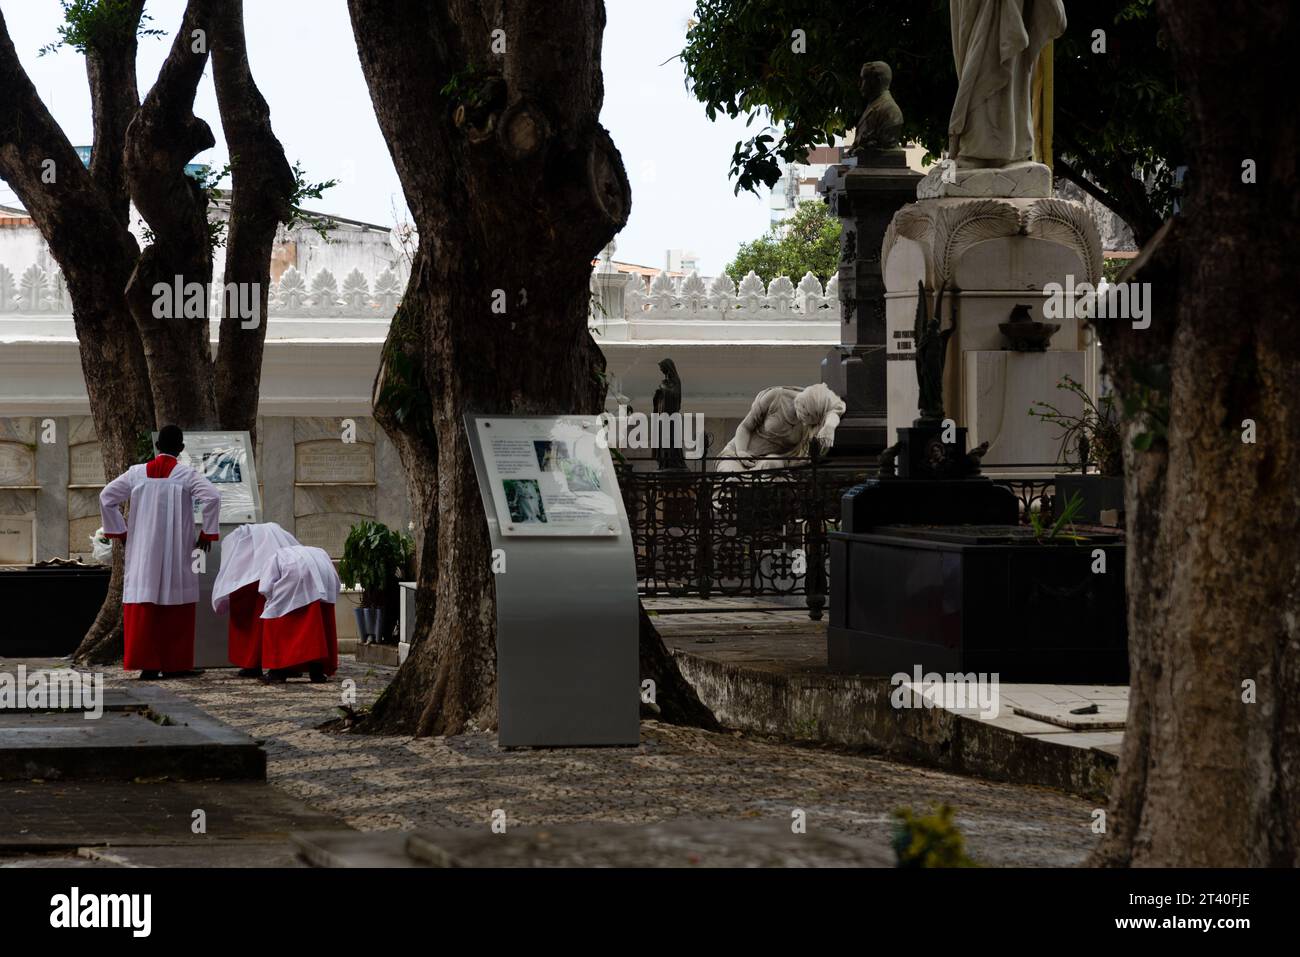 Salvador, Bahia, Brasilien - 2. November 2018: Blick auf den Friedhof Campo Santo am Tag der Toten in der Stadt Salvador, Bahia. Stockfoto